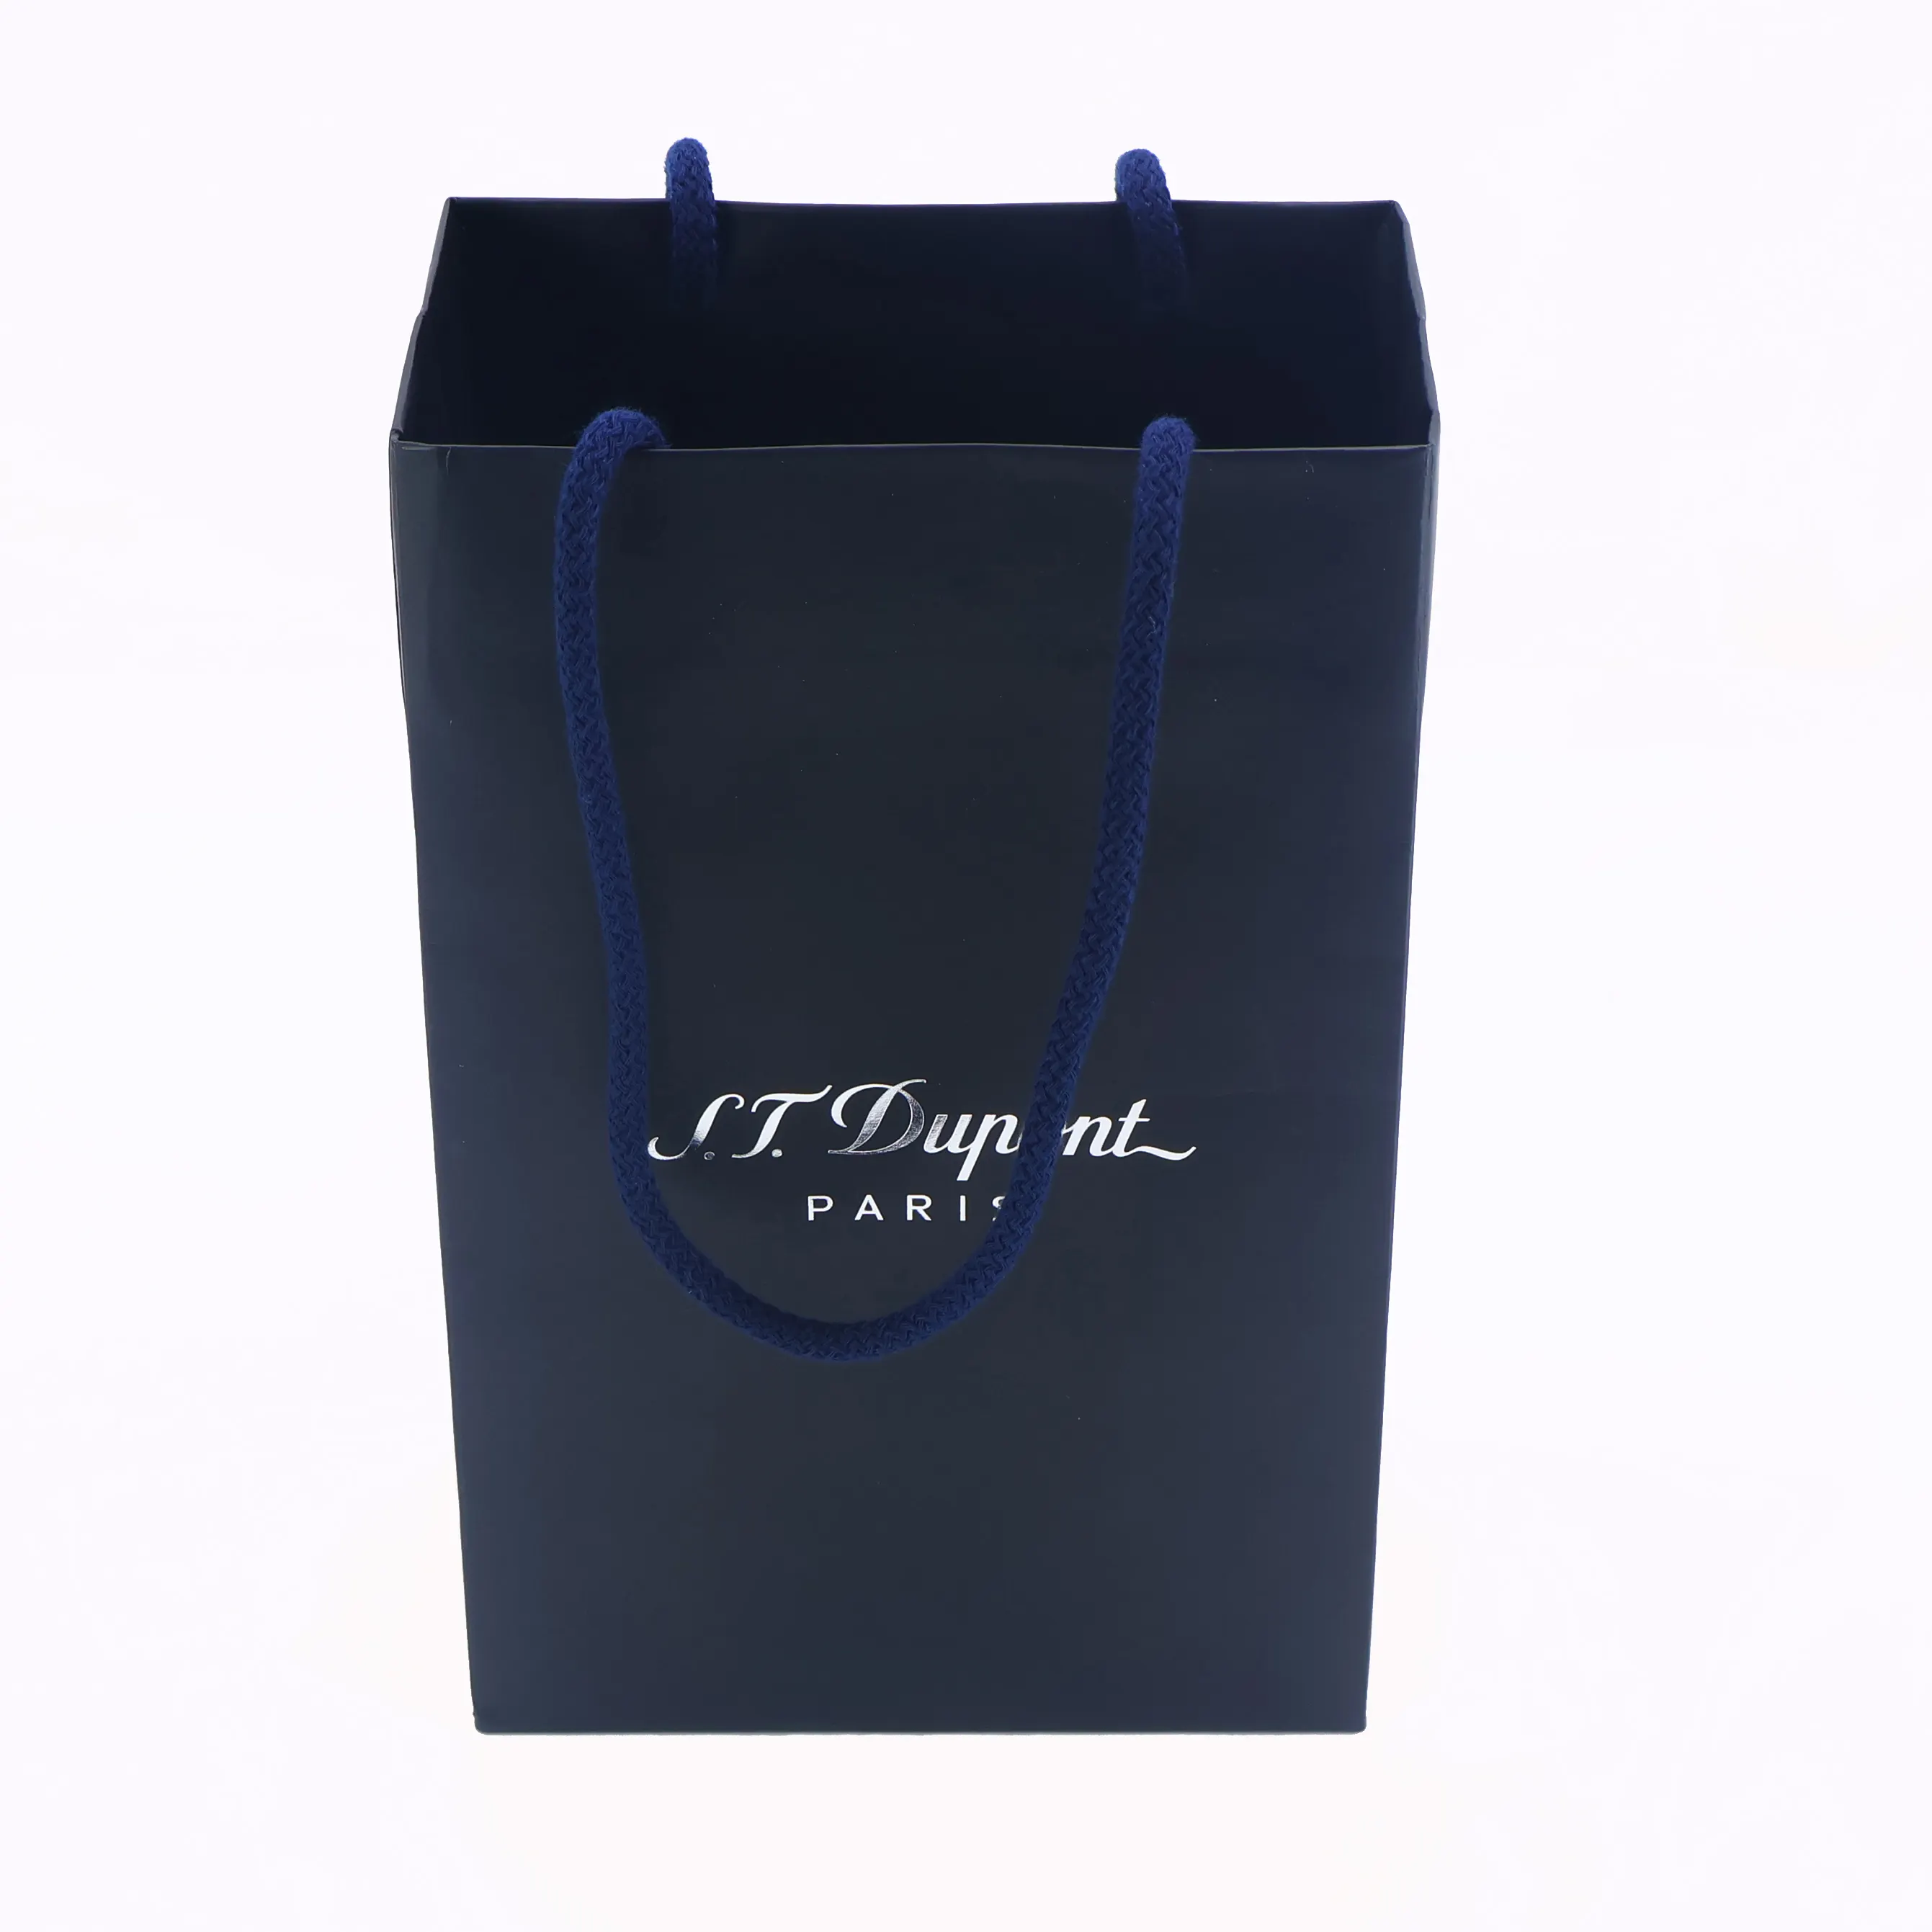 Cinta de lujo con asa Boutique Army Black Shopping Packaging Logotipo impreso personalizado Ropa interior Tote Take Out Bolsas de regalo de papel